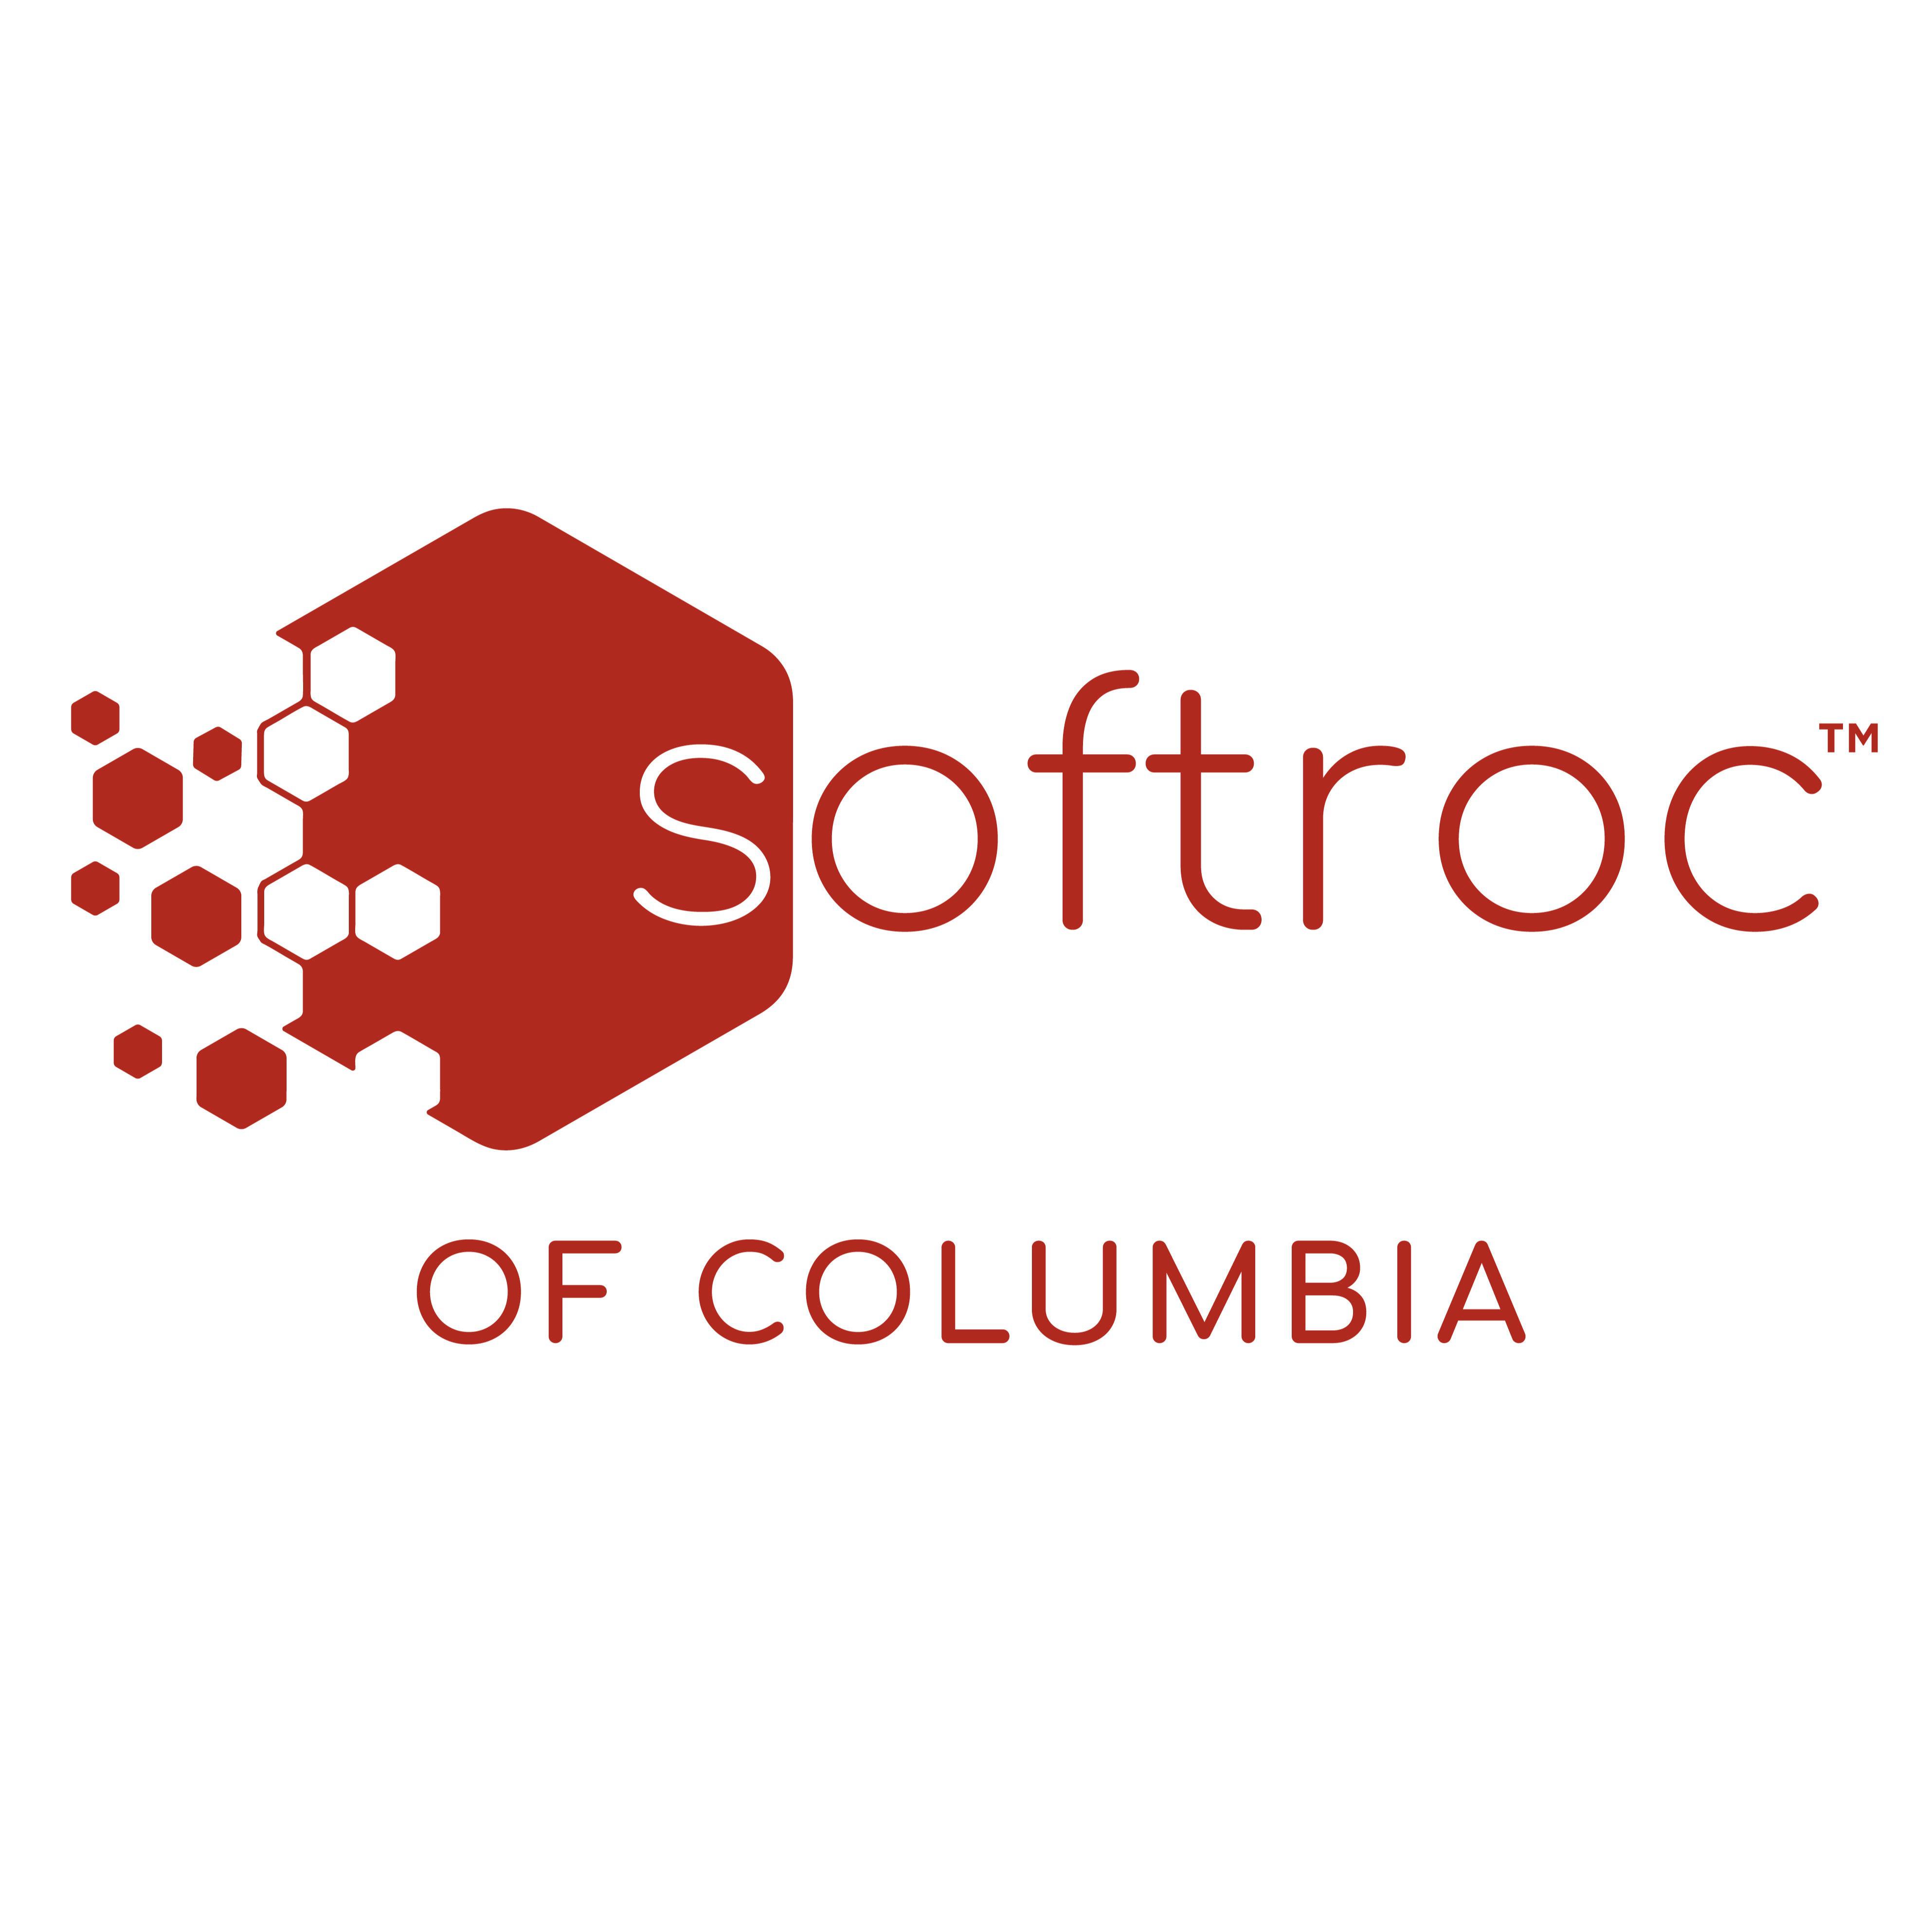 Softroc of Columbia